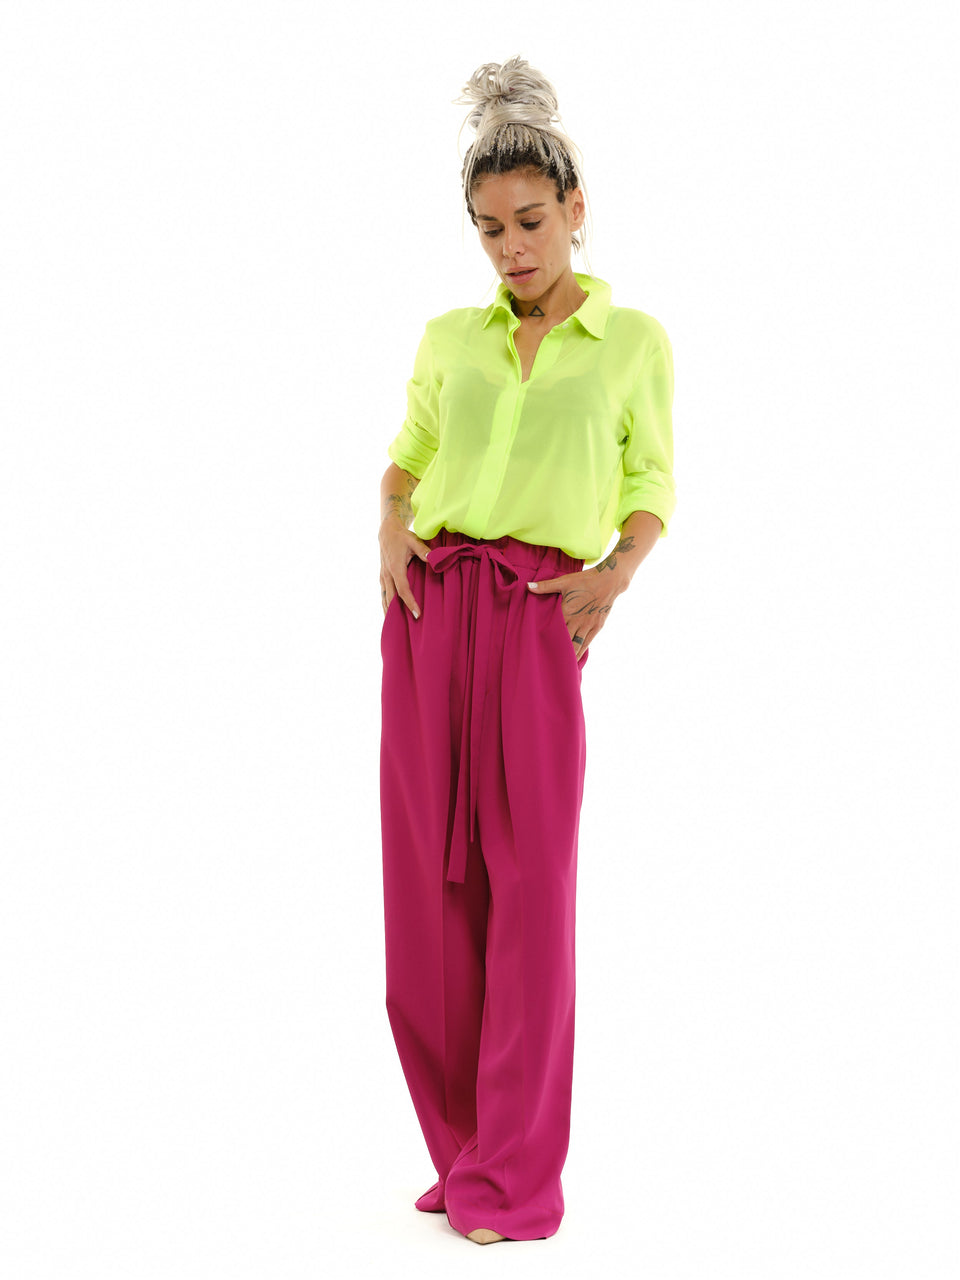 Airpow Clearance Cargo Pants Women's Street Style Fashion Design Sense  Multi Pocket Overalls Low Waist Sports Pants Hot Pink XS - Walmart.com